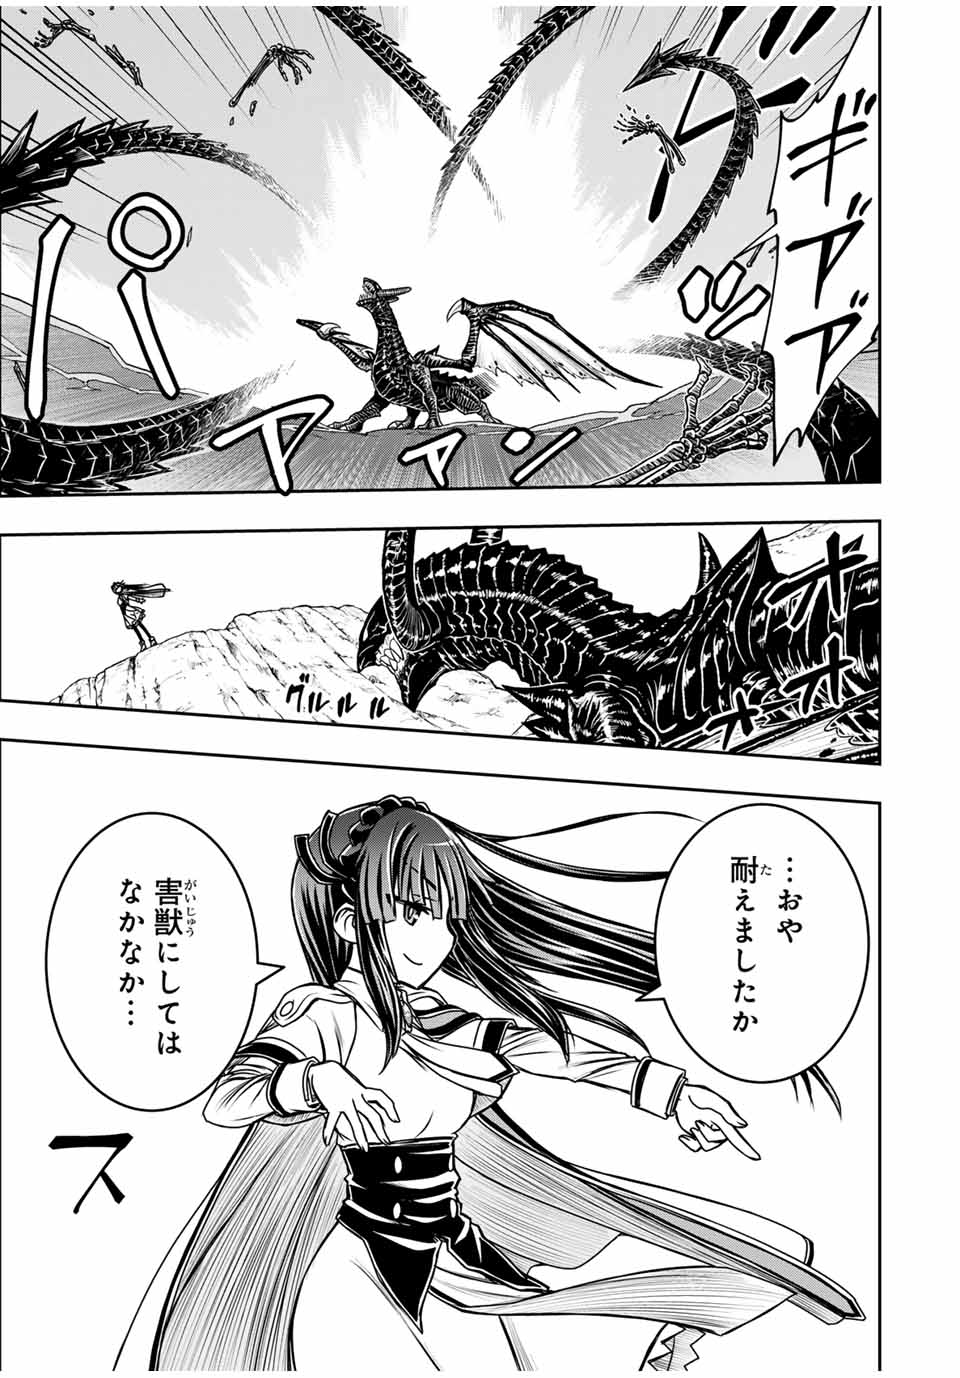 Nengan no Akuyaku Reijou (Last Boss) no Karada wo Teniiretazo!  - Chapter 22 - Page 11